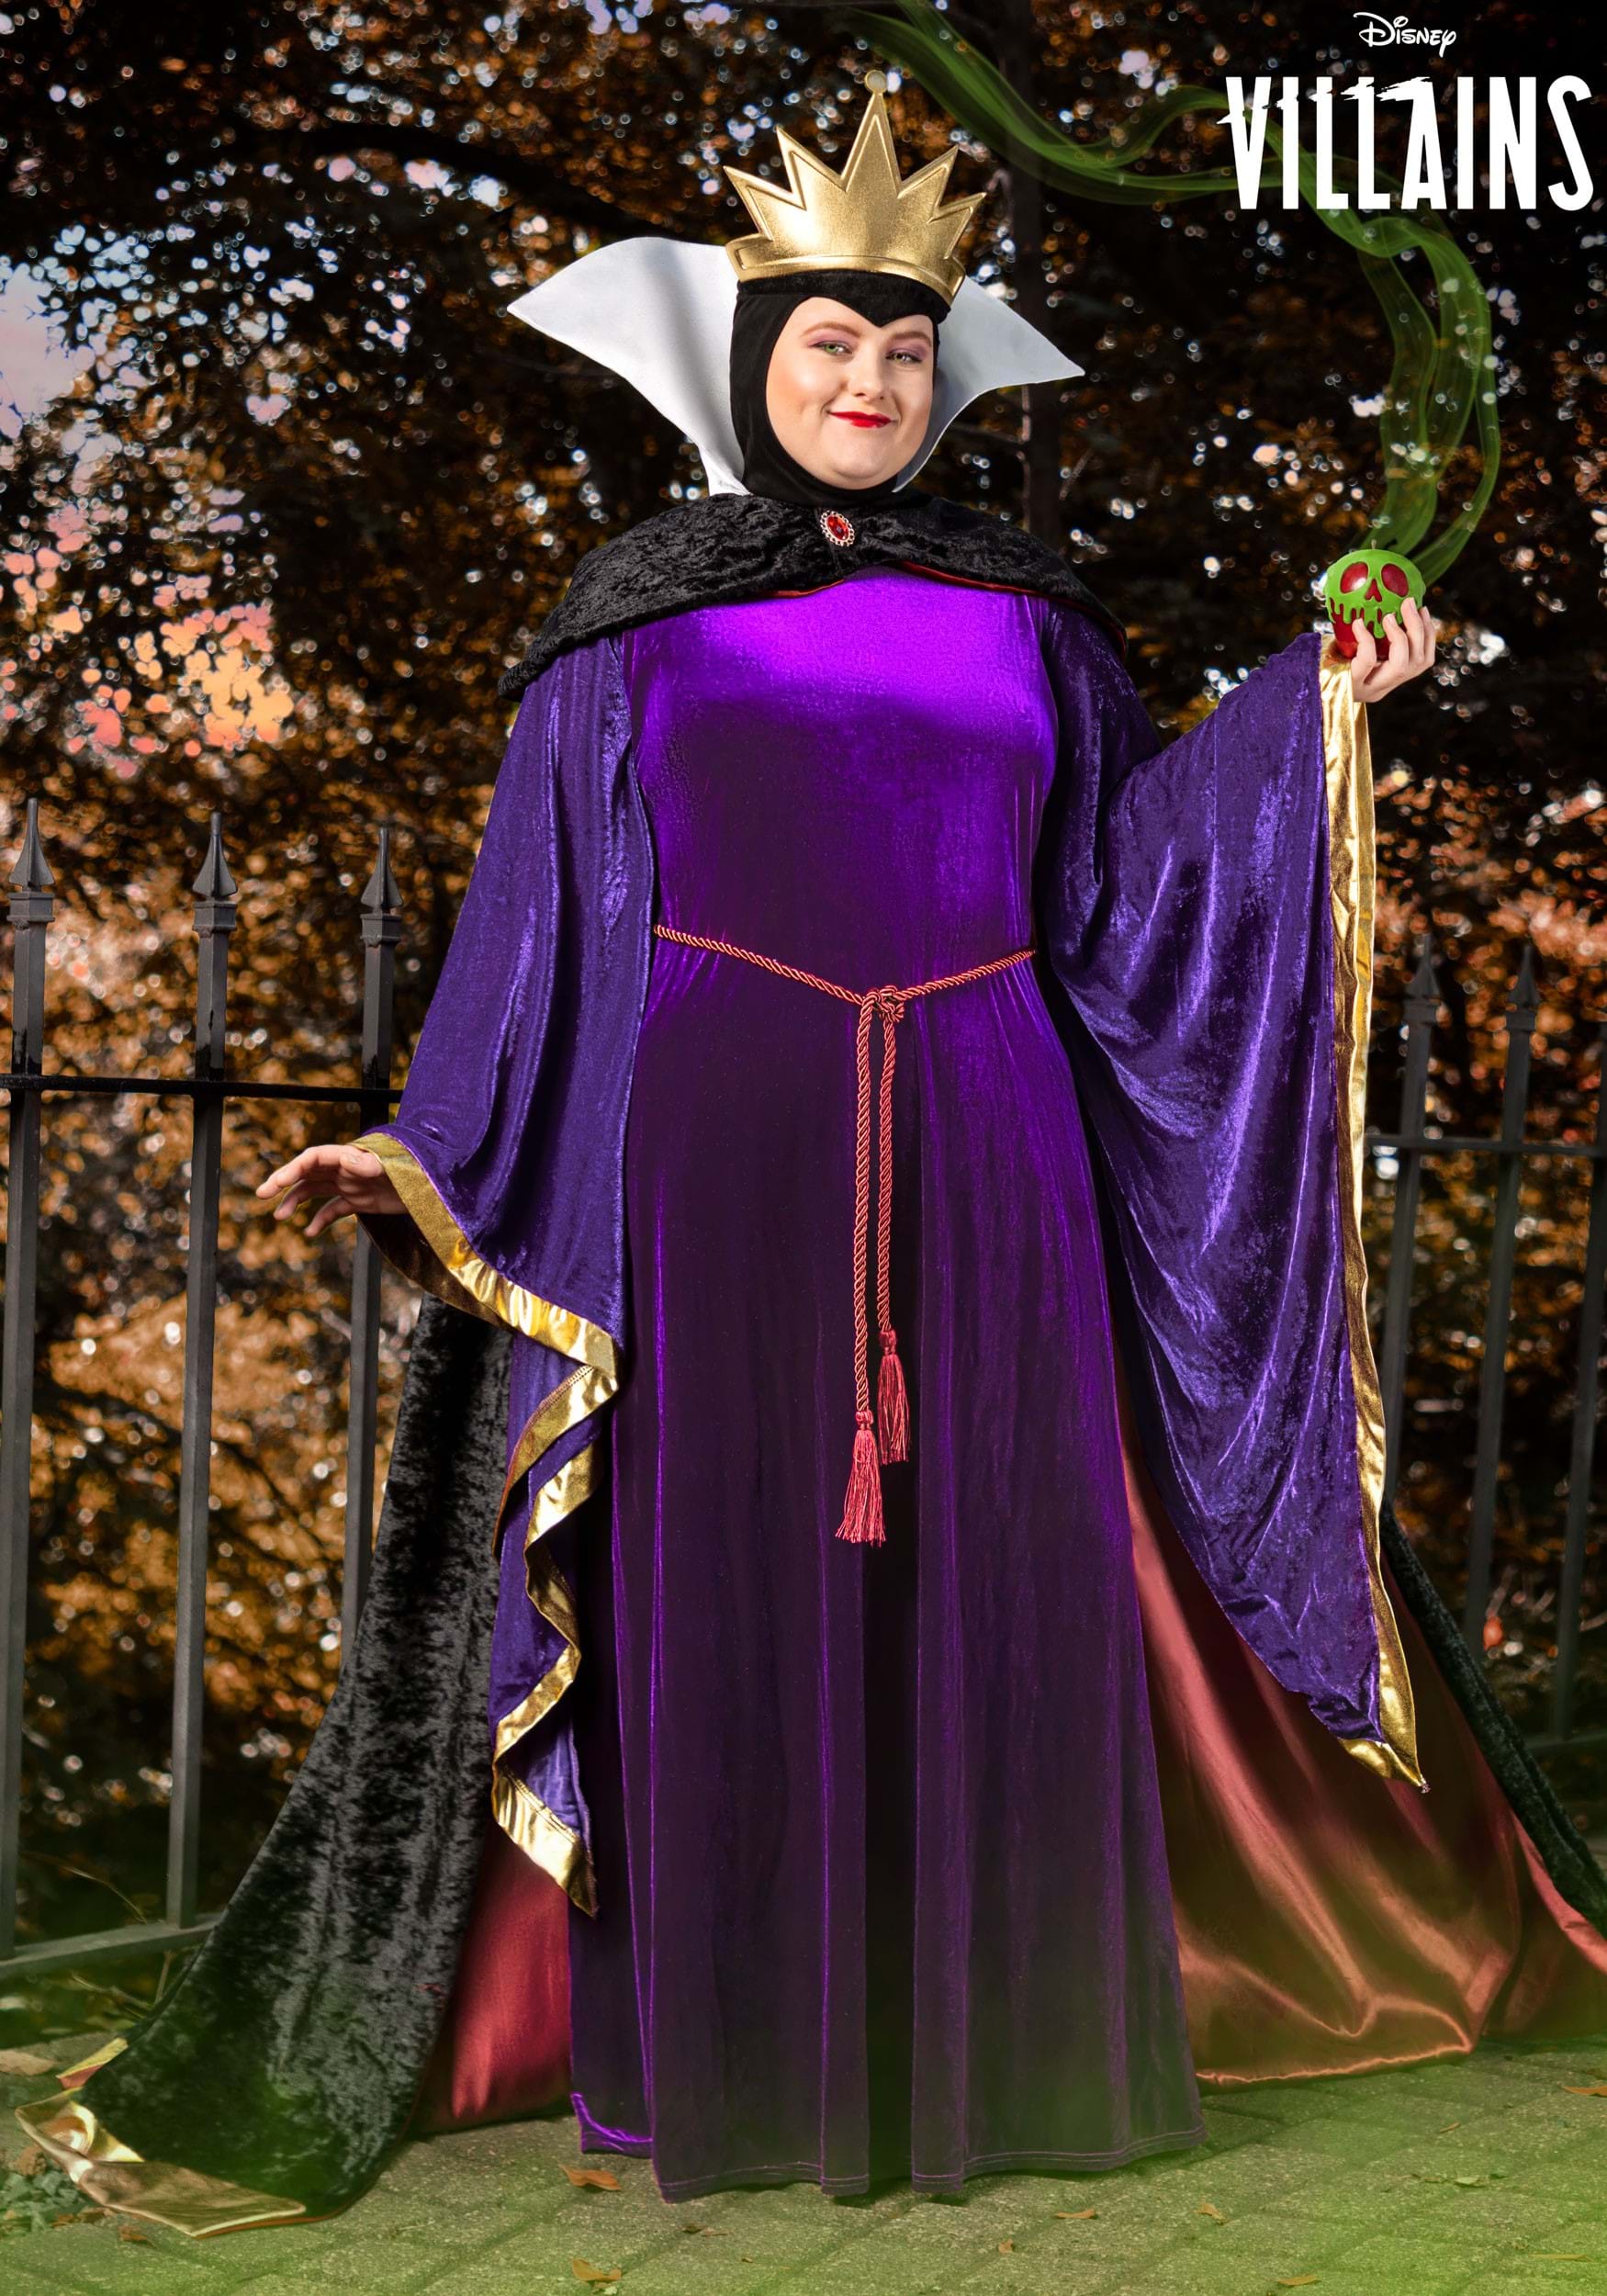 evil disney princesses costumes